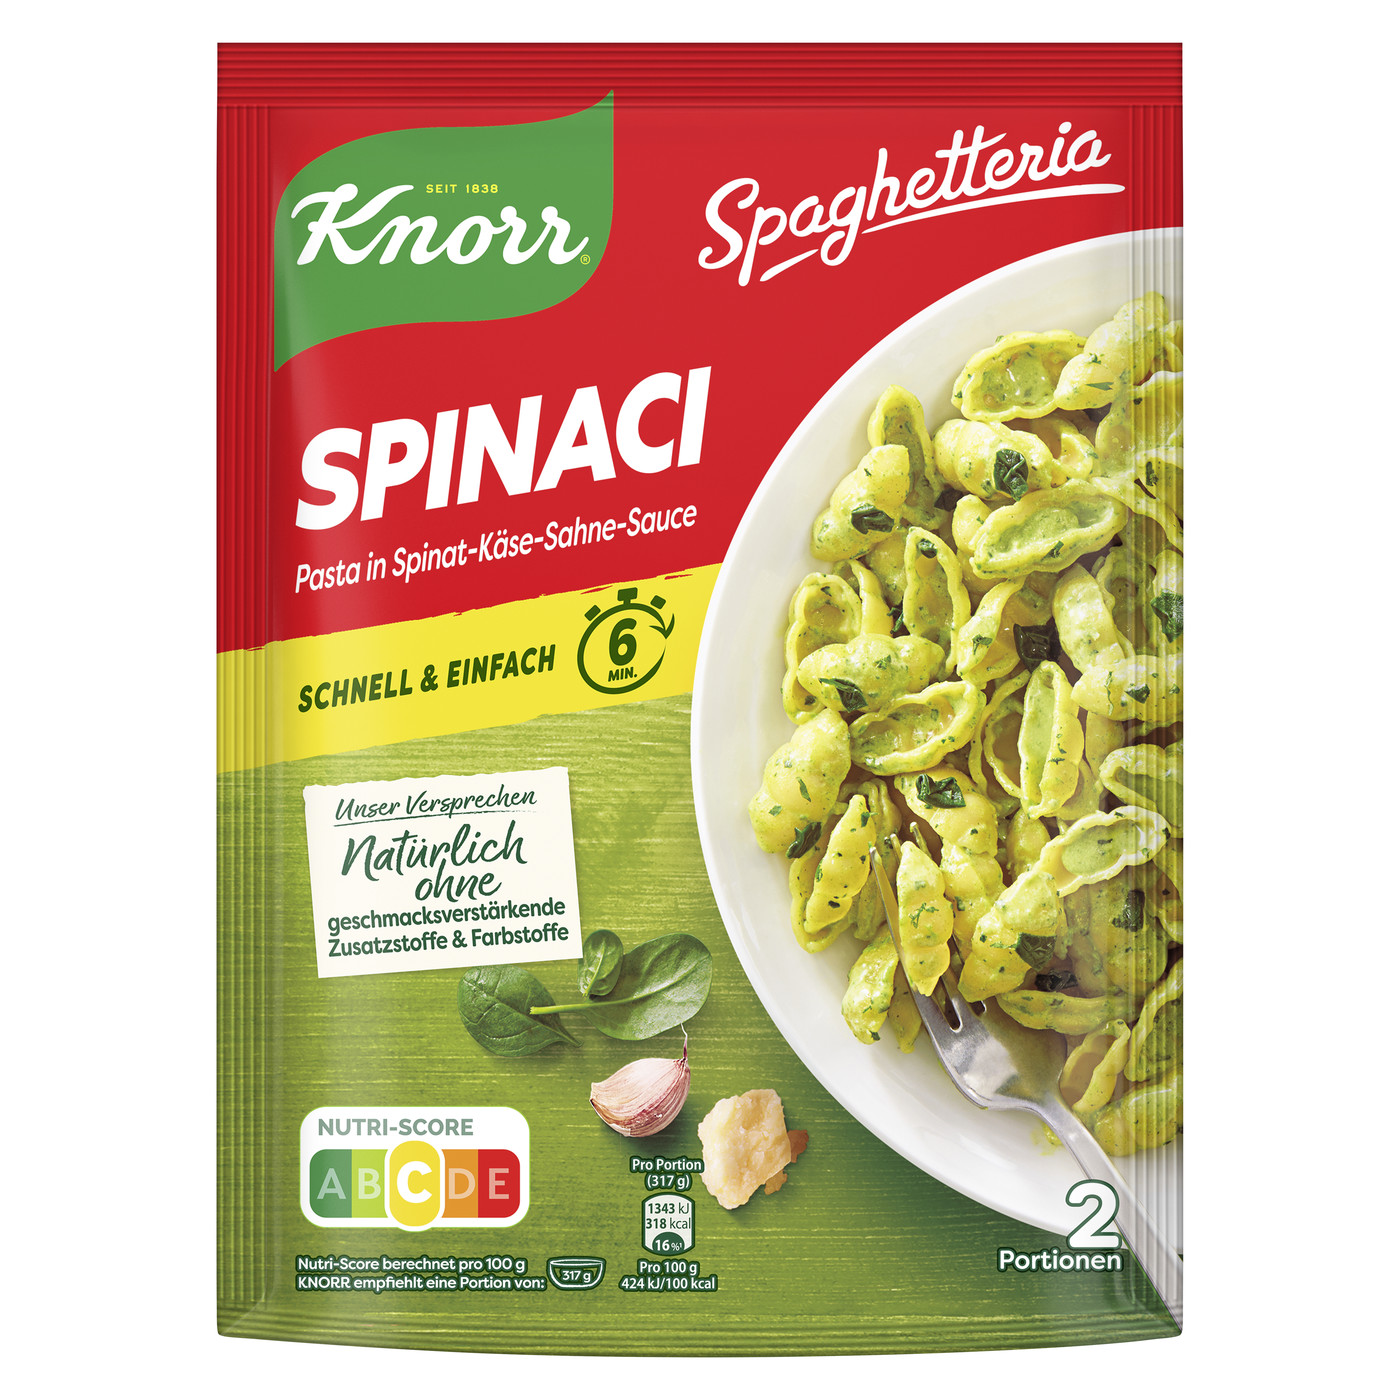 Knorr Spaghetteria Spinaci 160G